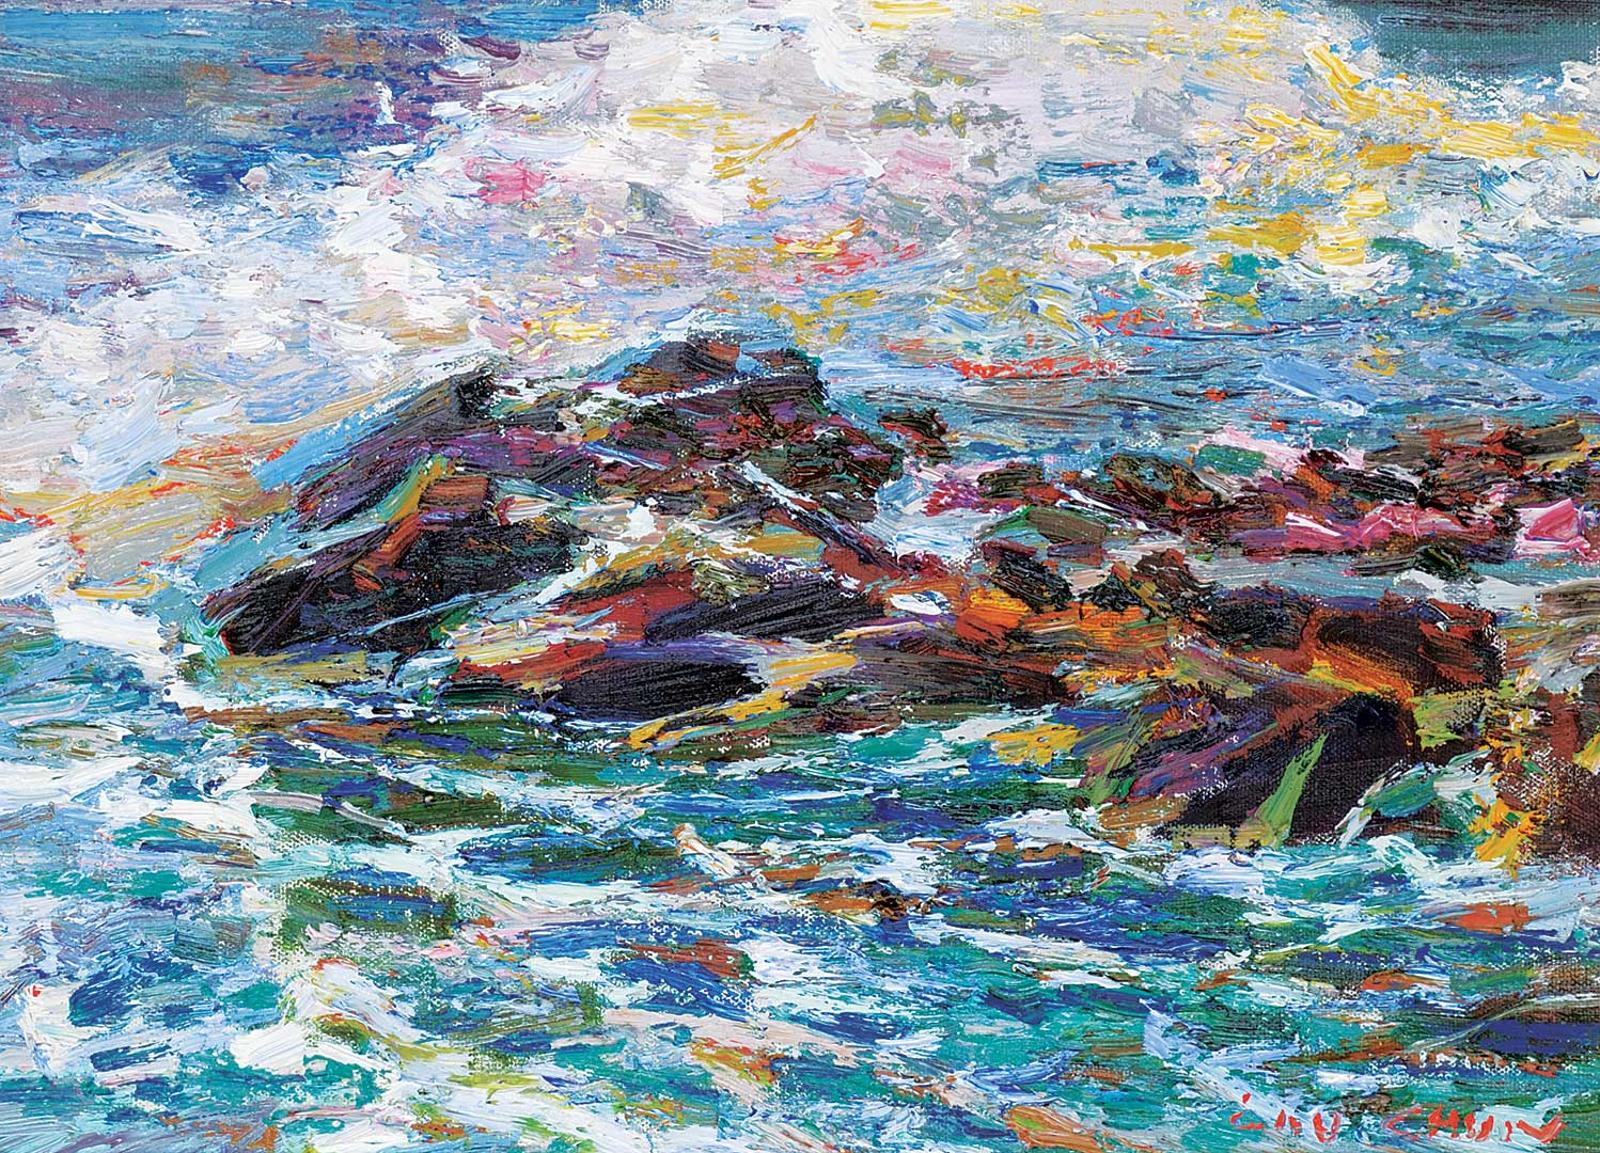 Lau Chun (1942) - Untitled - Ocean Abstract